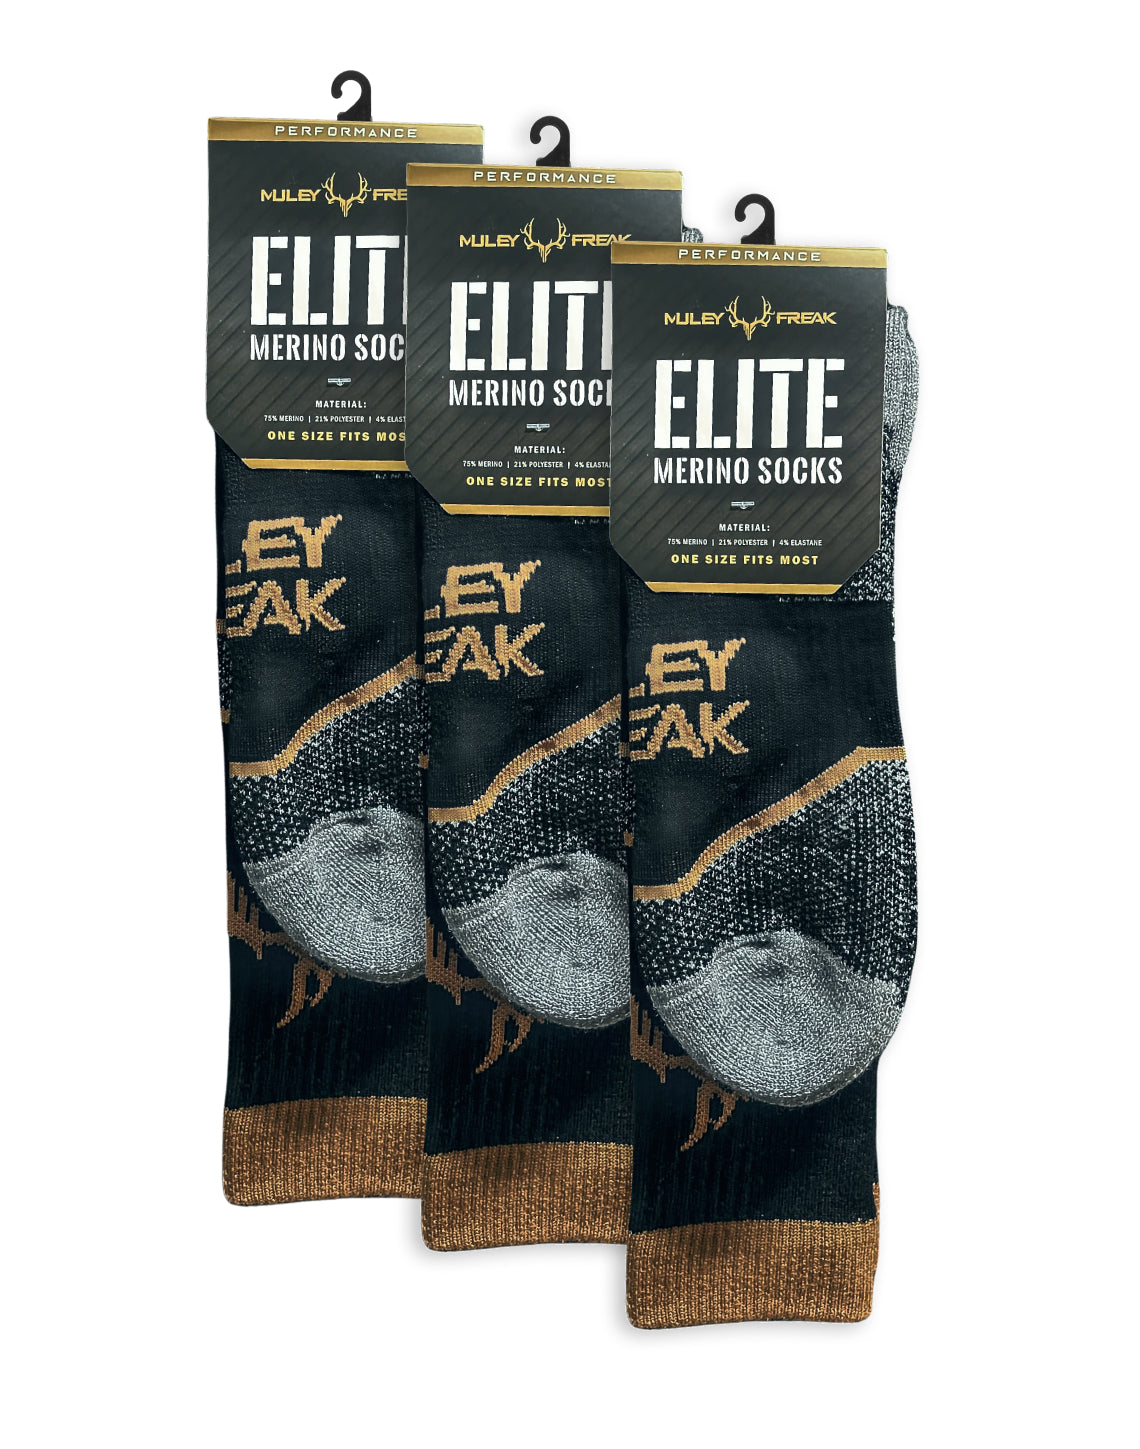 ackaged Muley Freak Elite Merino Socks, showcasing the natural performance blend.